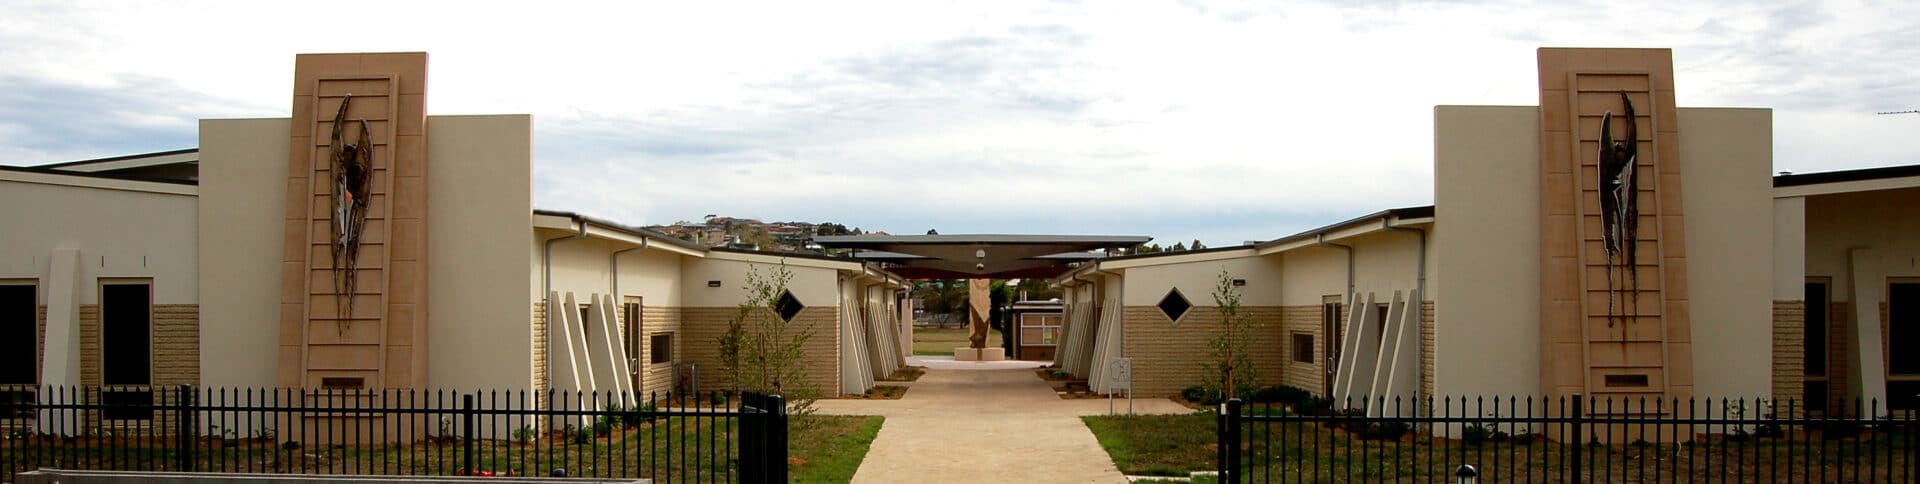 St Patricks School, Melbourne Australia